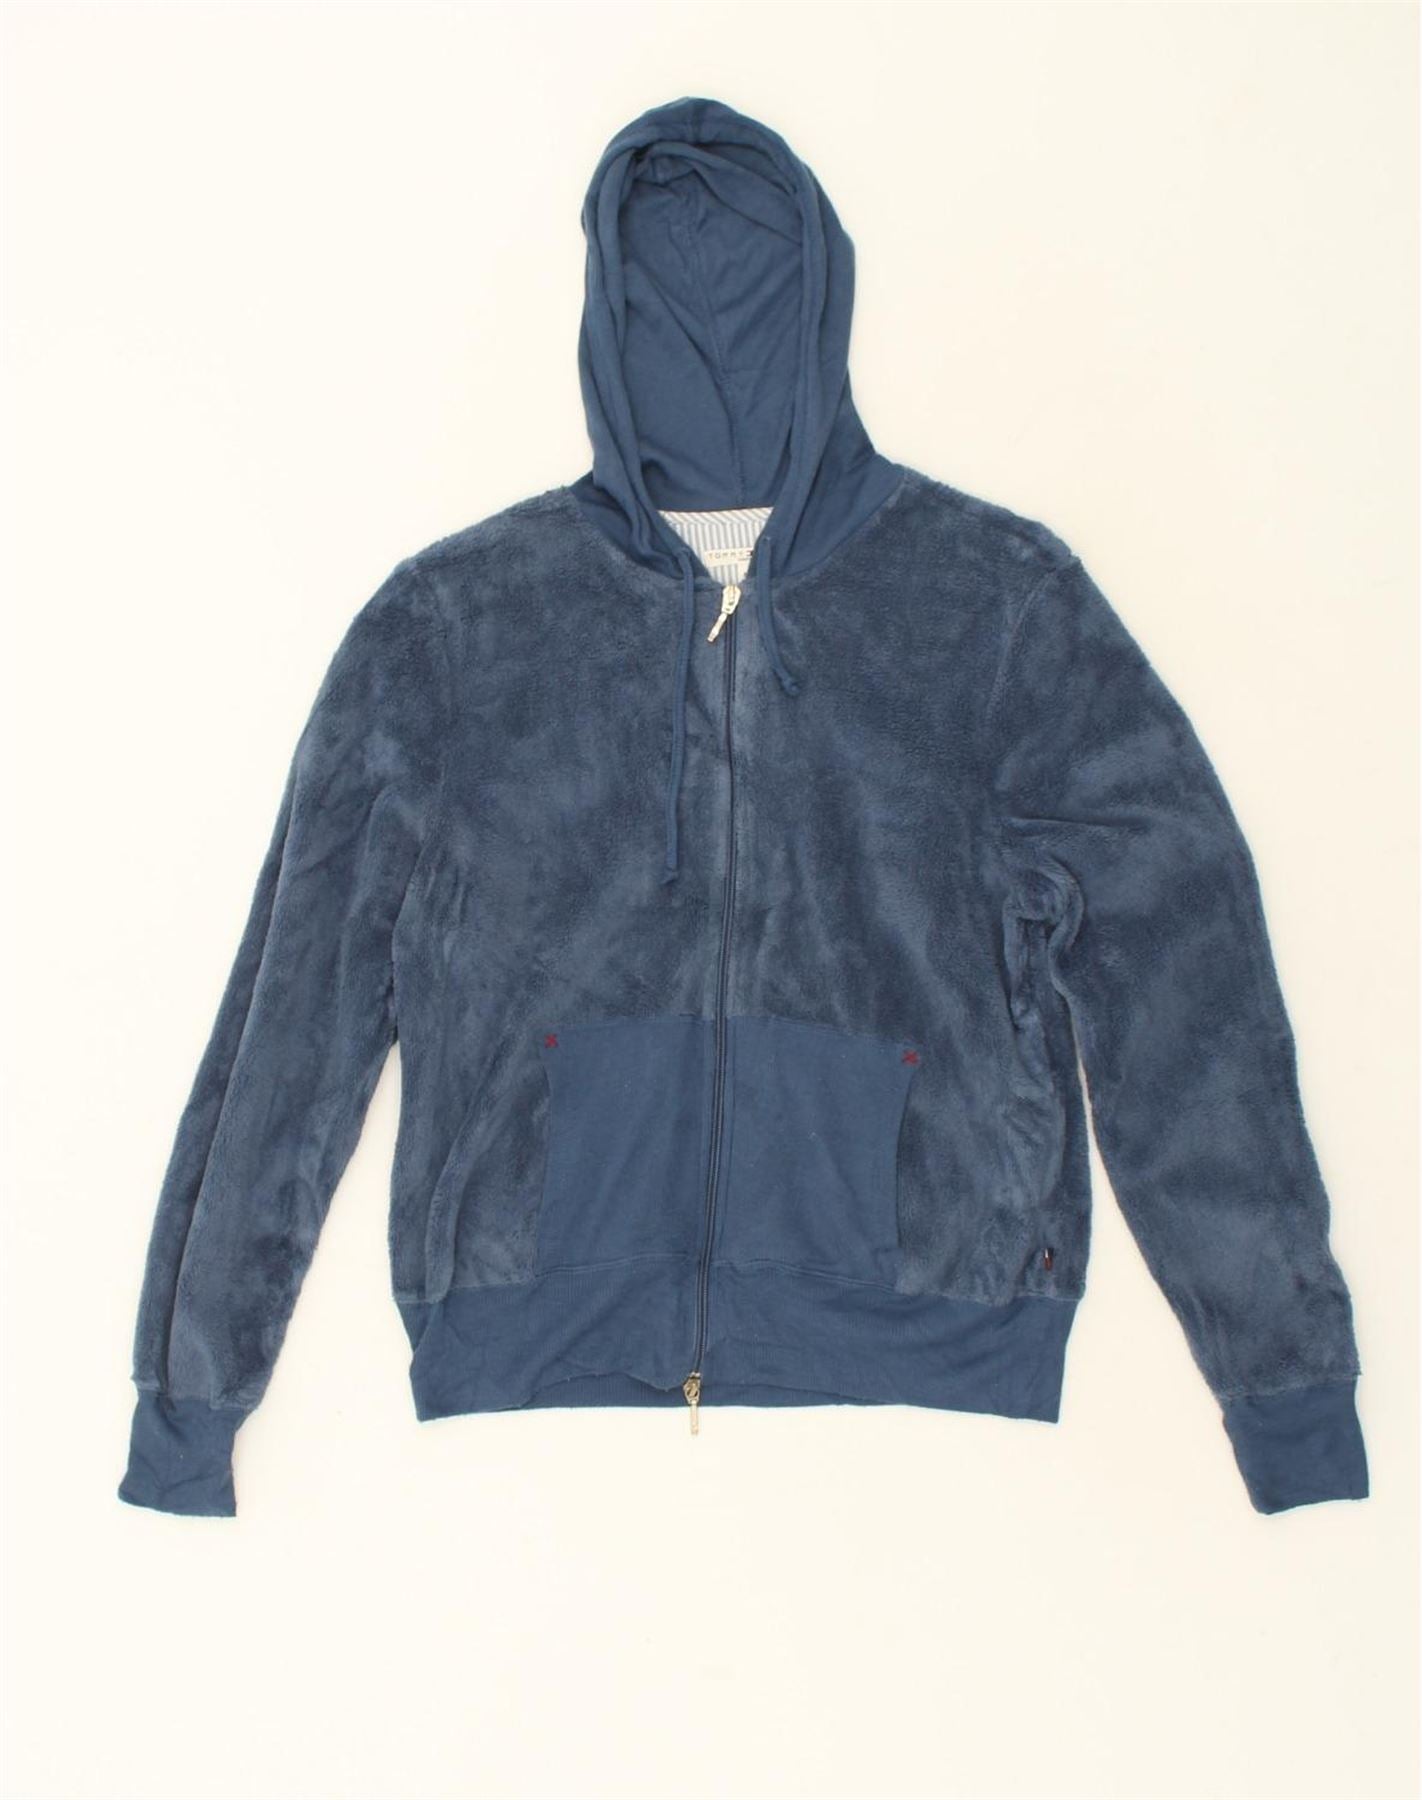 TOMMY HILFIGER Womens Hooded Fleece Jacket UK 12 Medium Blue